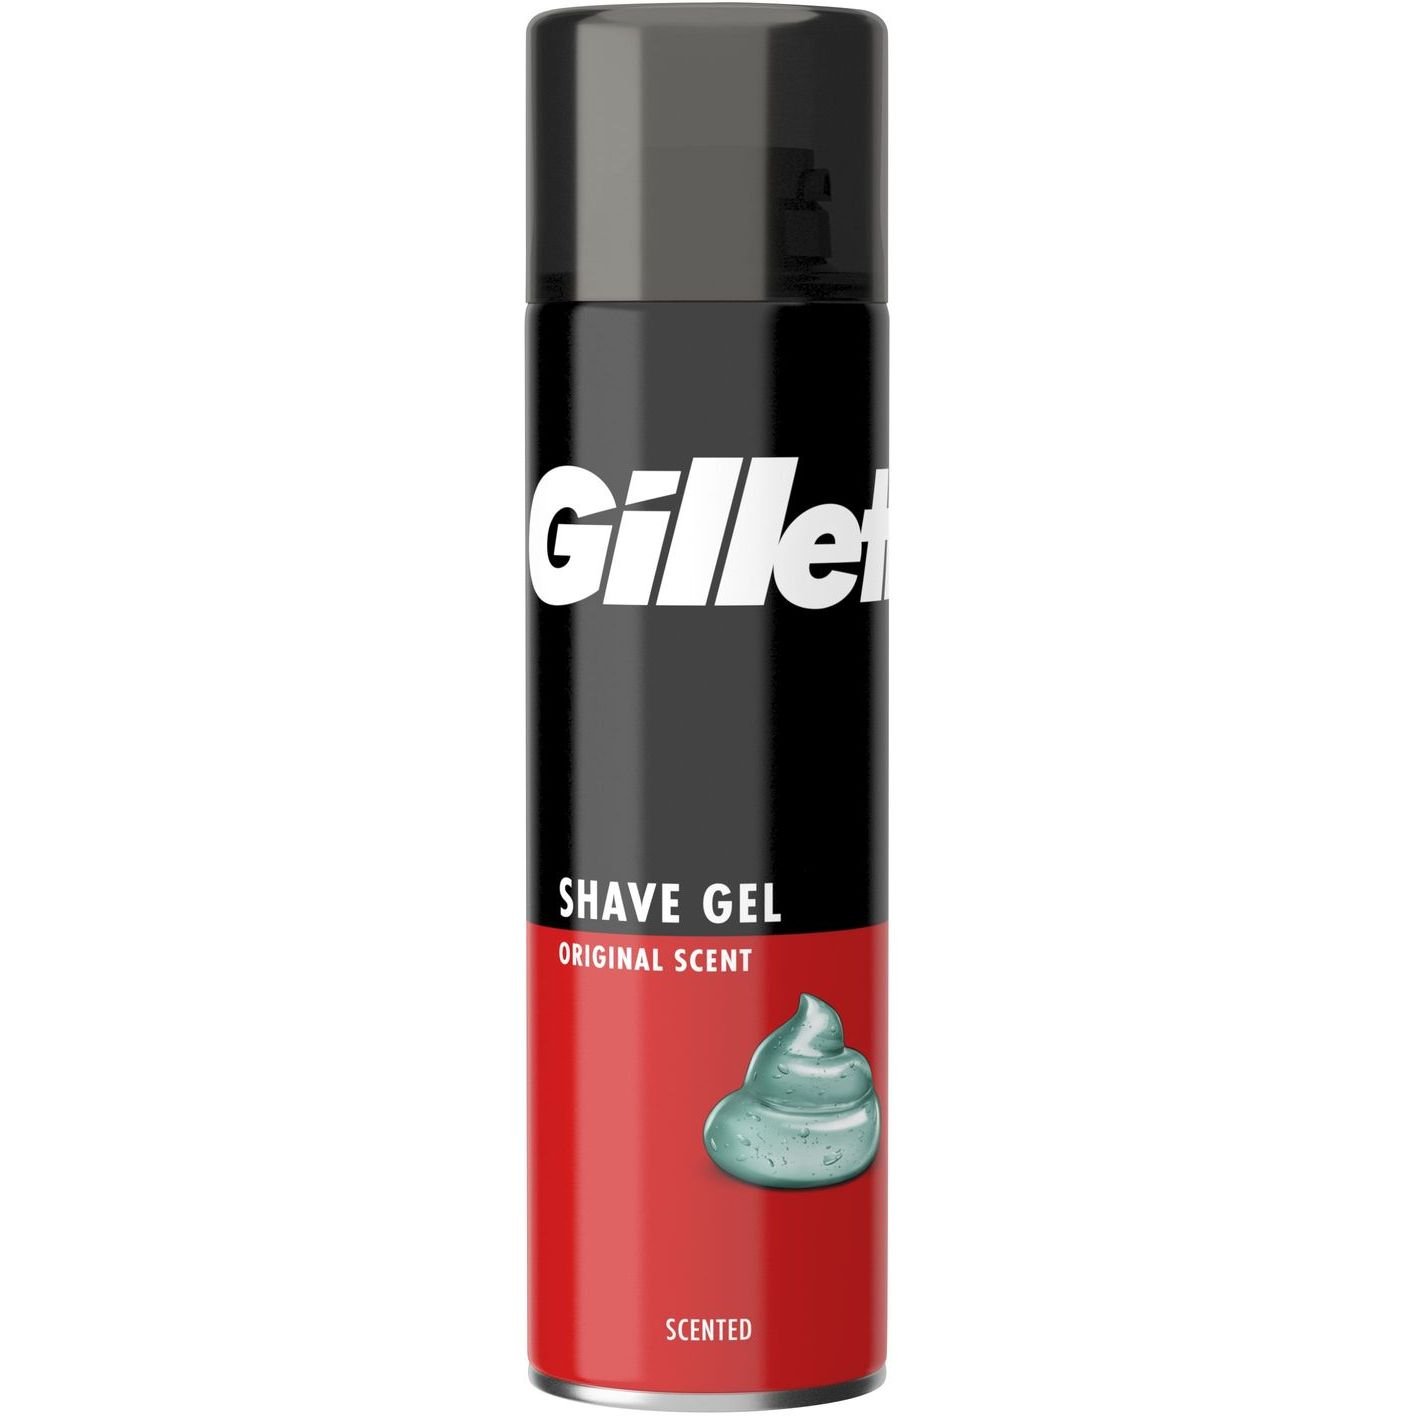 Гель для гоління Gillette Classic Original Scent, 200 мл - фото 1